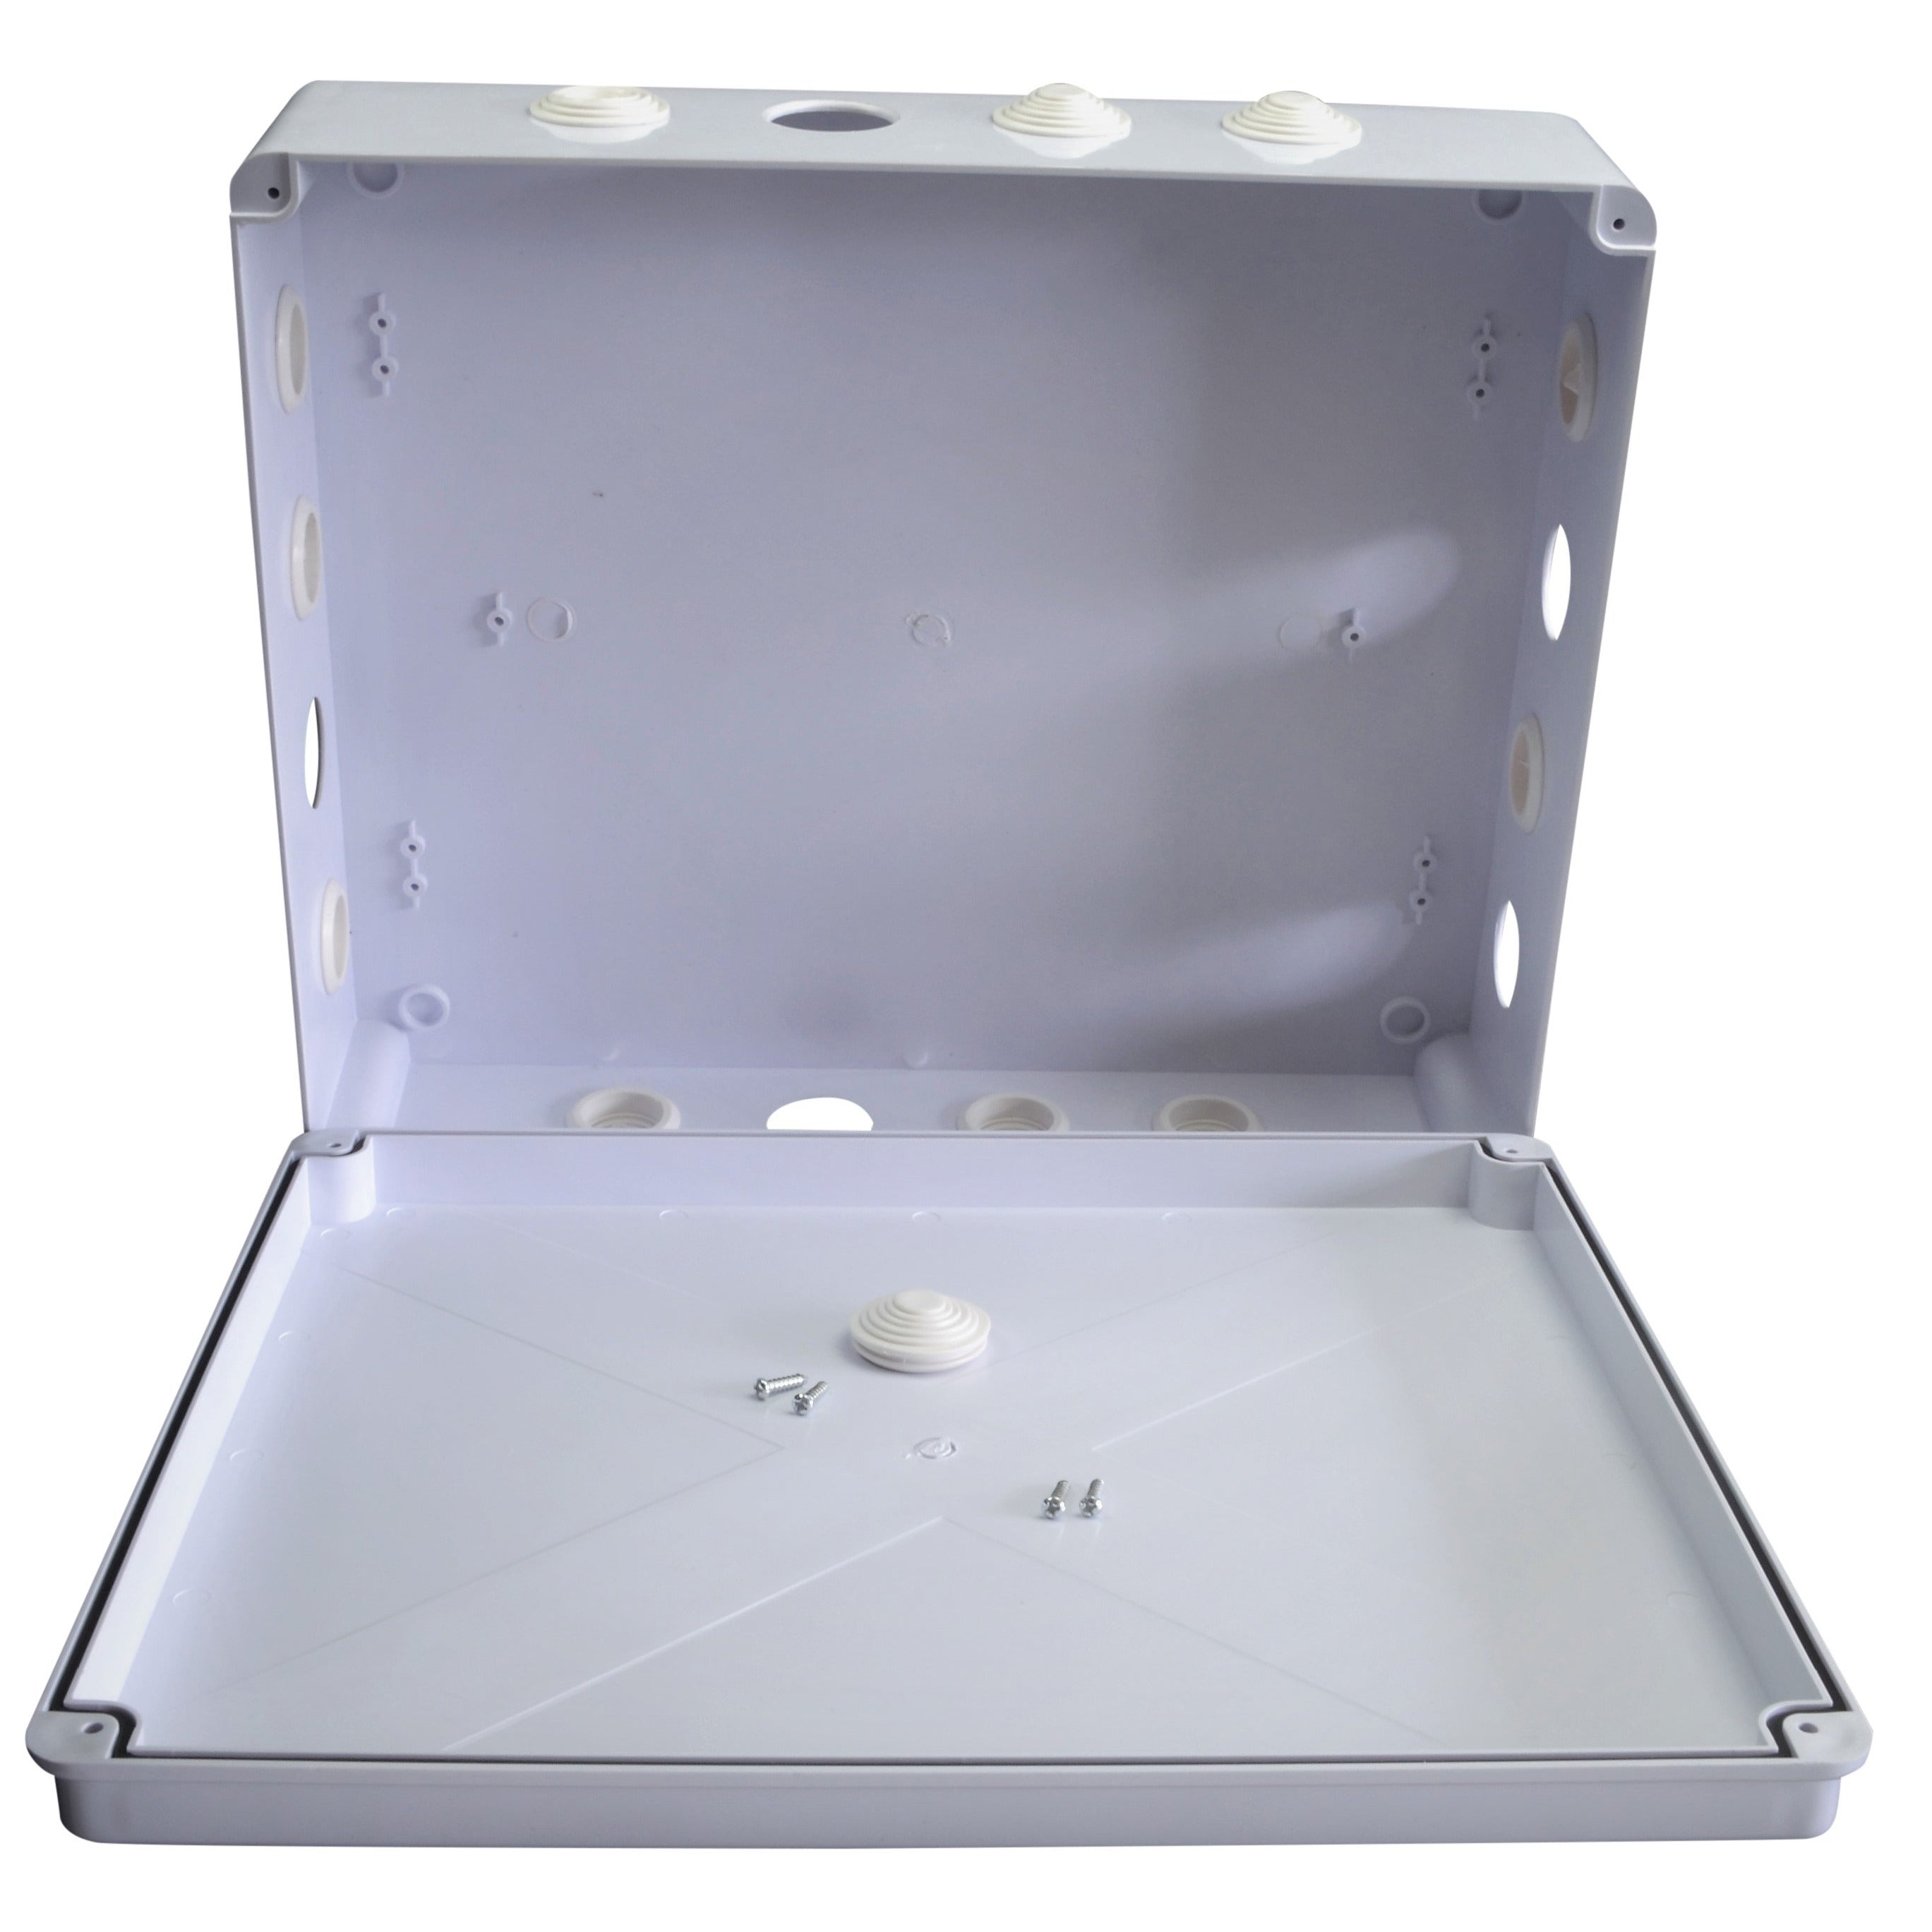 400x350x120 mm ABS Plastic IP65 Waterproof Junction Box